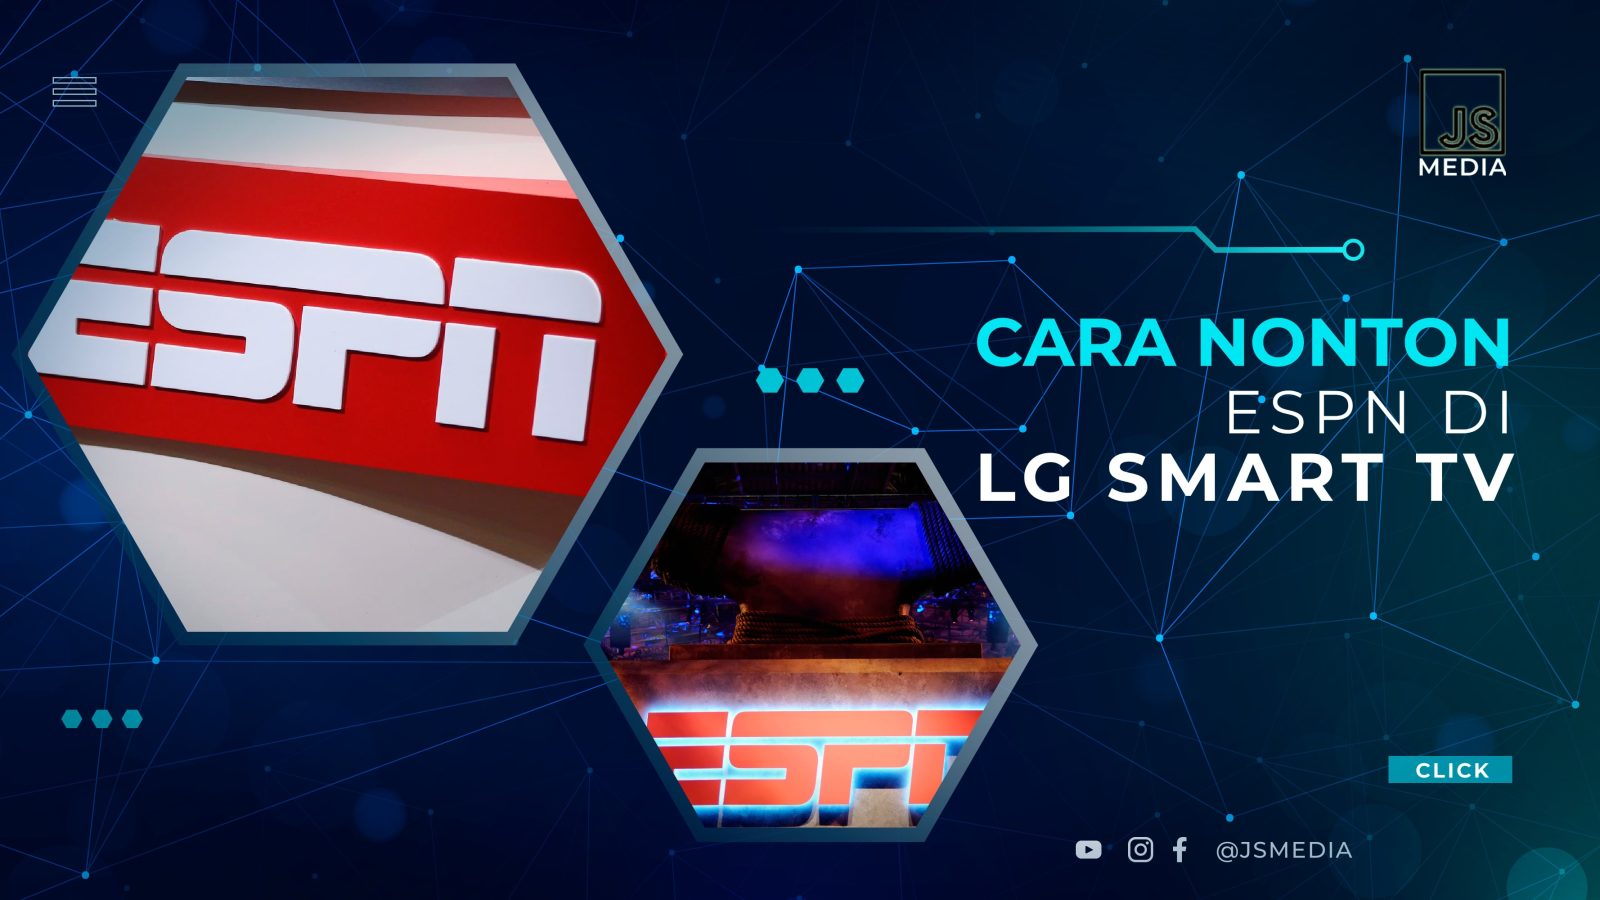 Cara Nonton ESPN di LG Smart TV